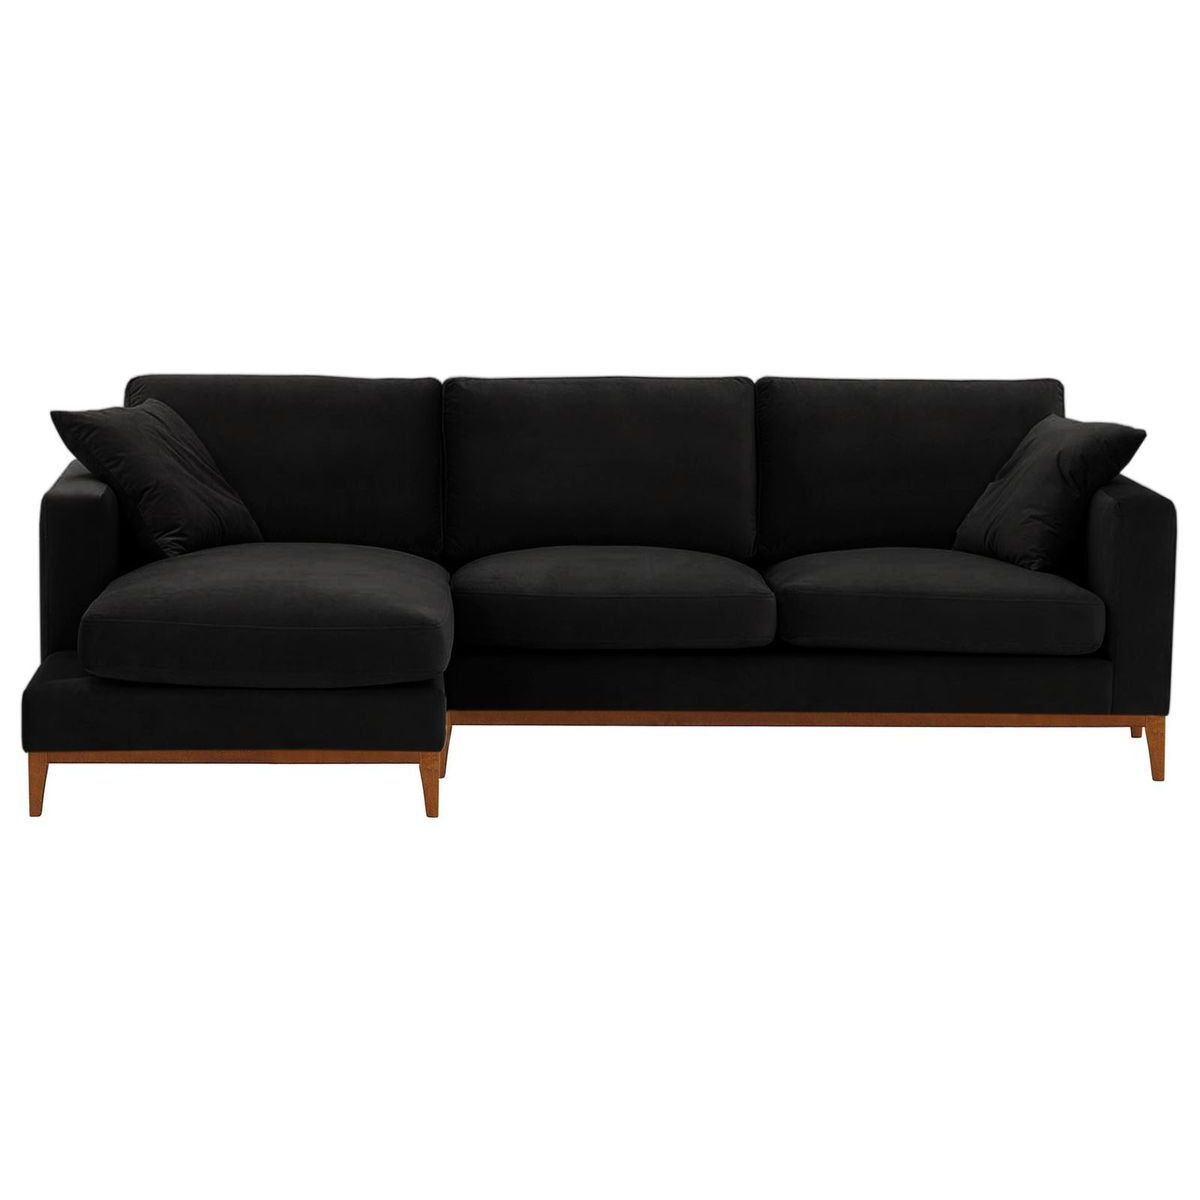 Covex Wood Left-Hand Corner Sofa, black, Leg colour: aveo - image 1